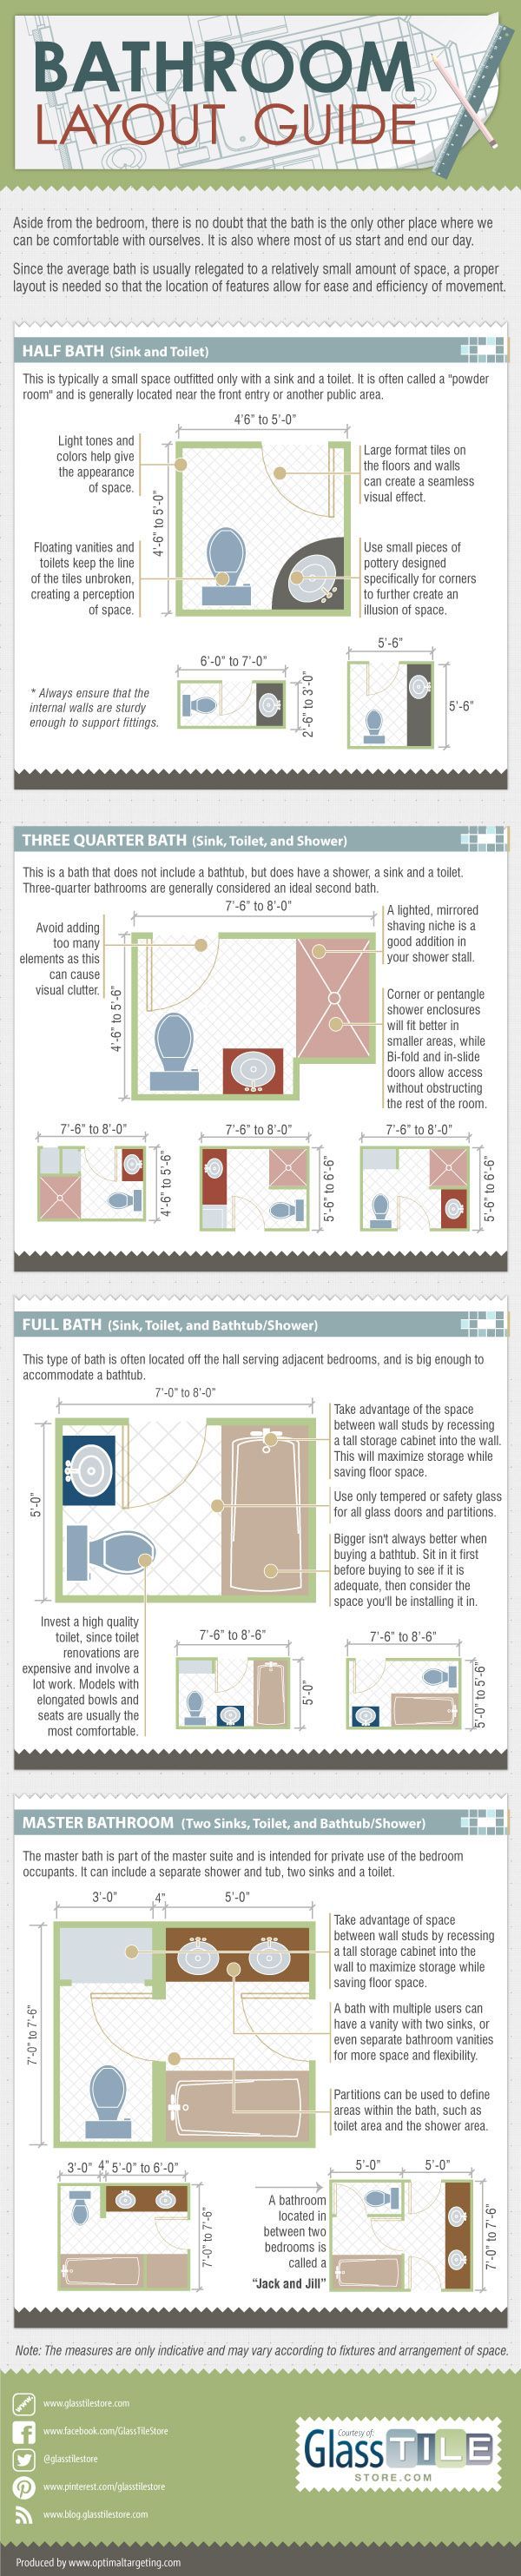 Interesting tips on how to make a half-bath look bigger! #bathroomlayout